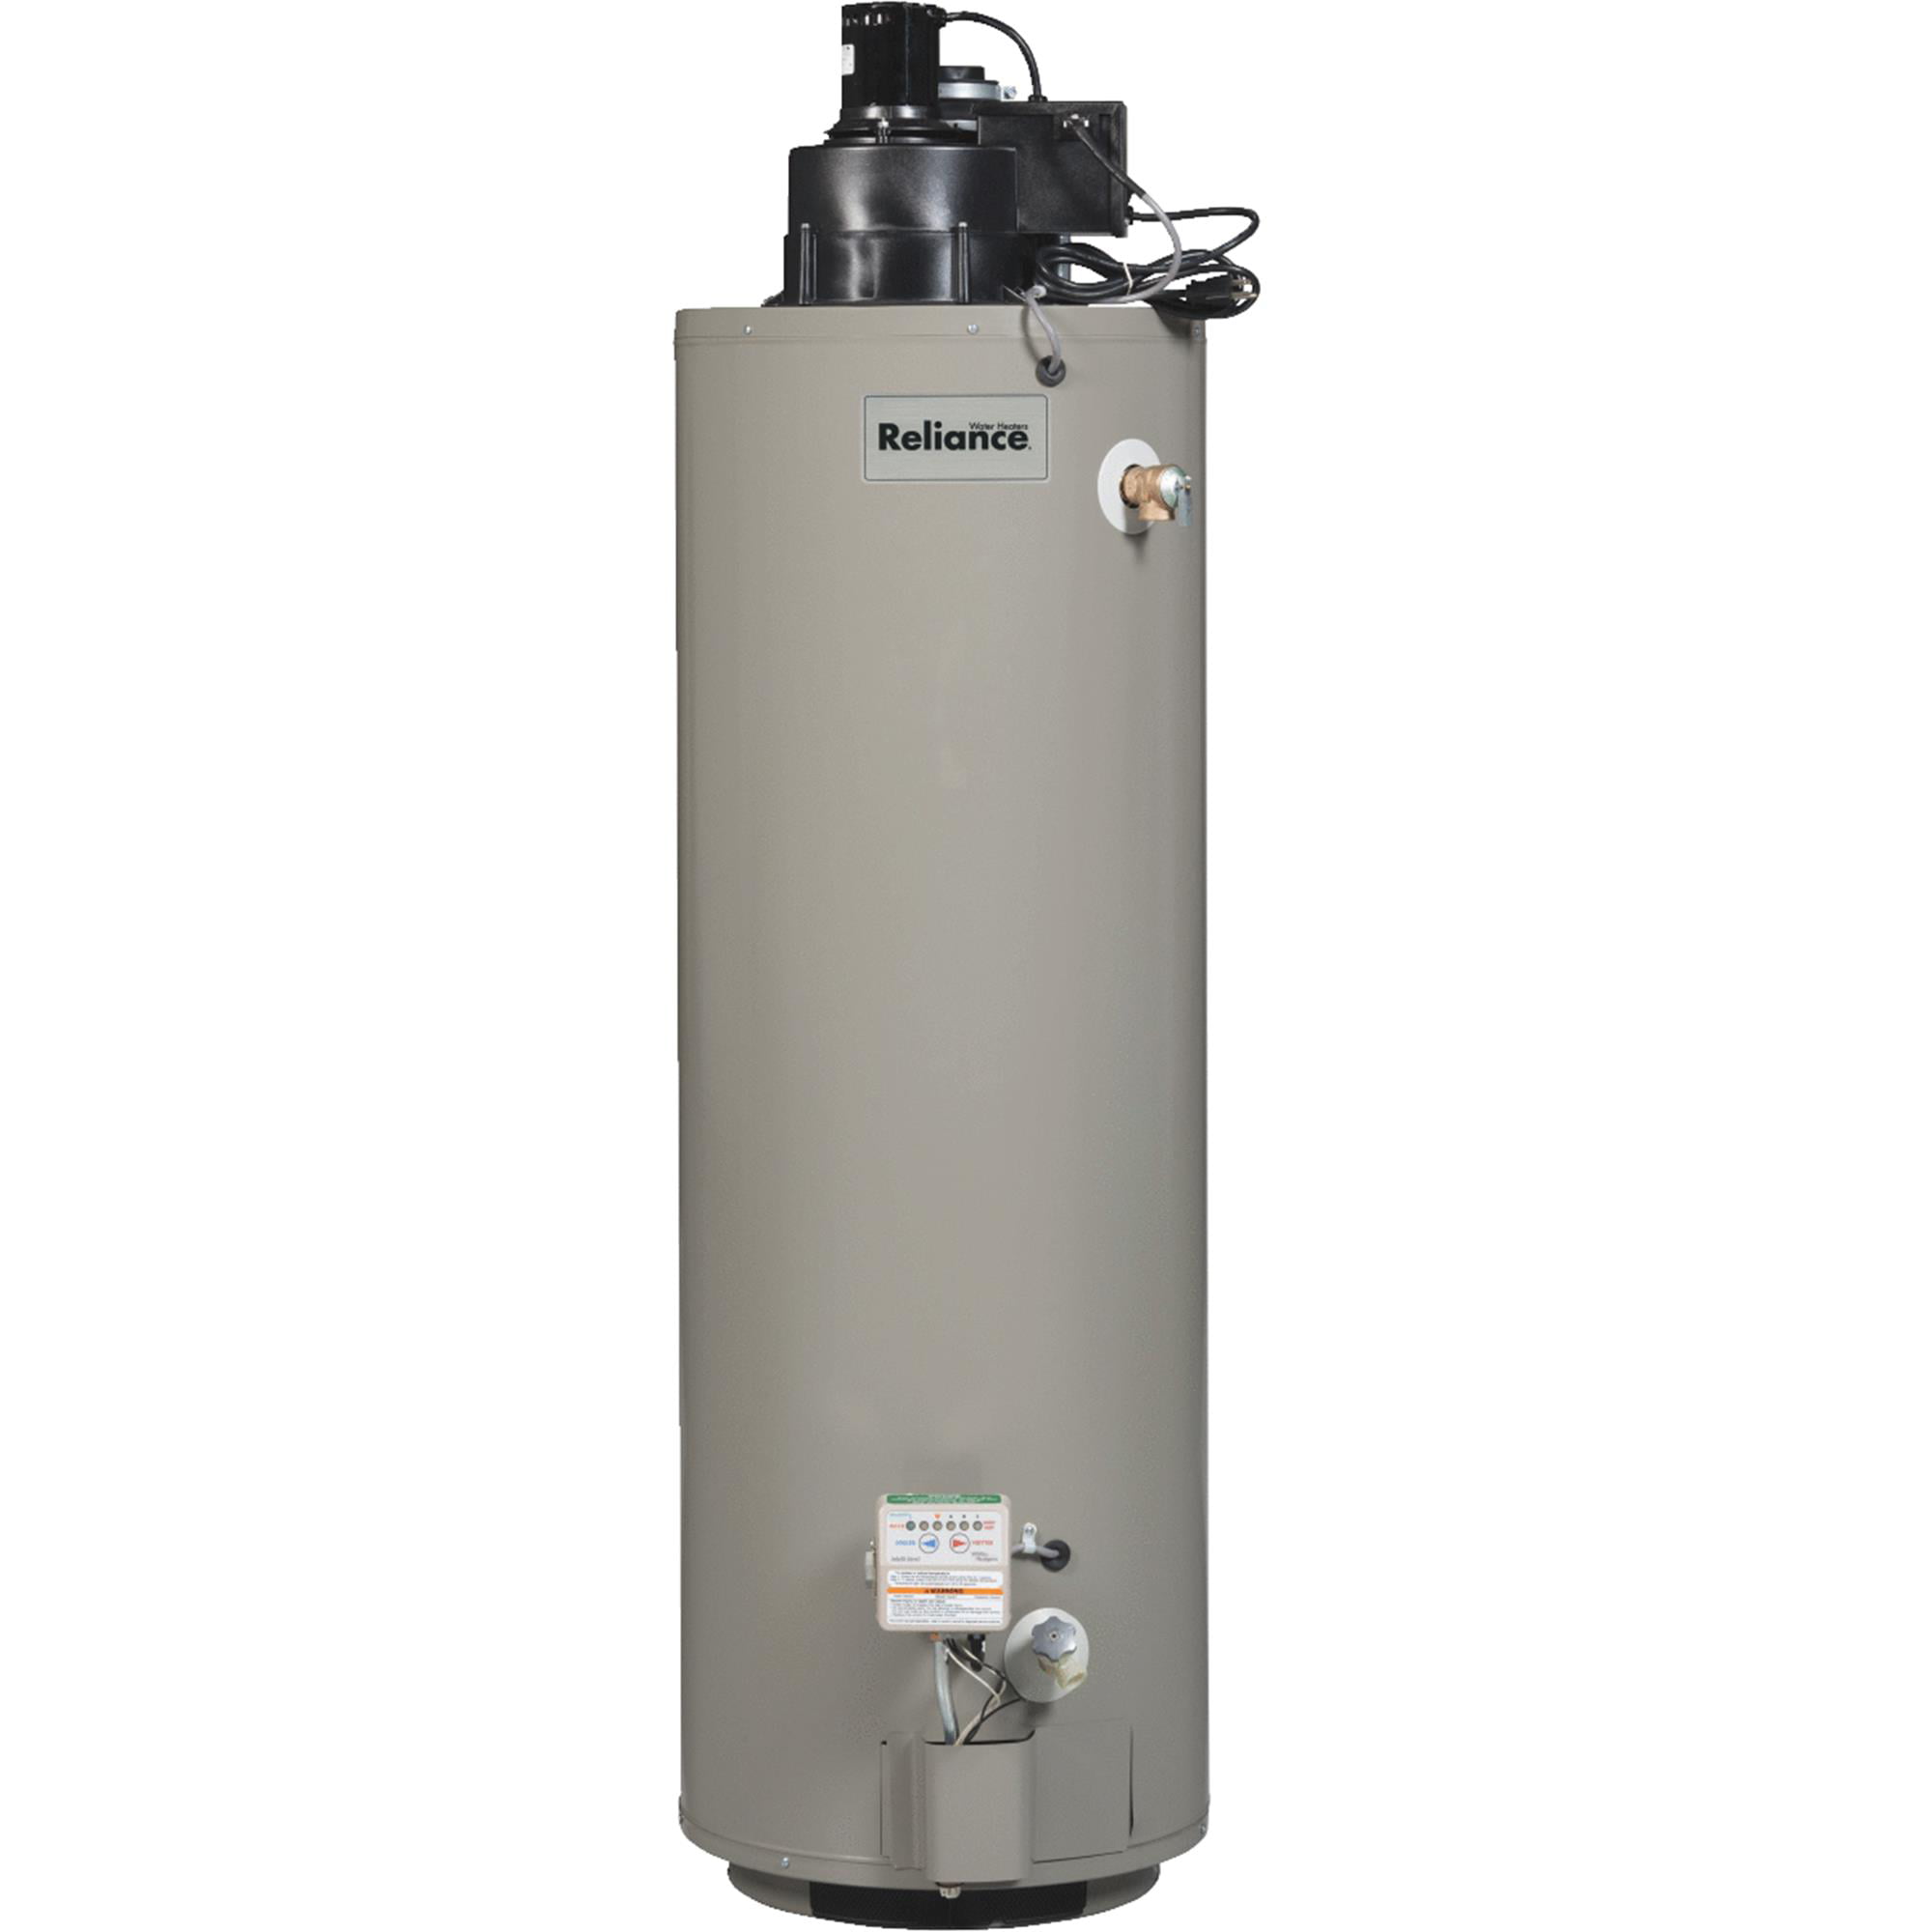 reliance-6-40-hrvit-lp-gas-power-vent-water-heater-40-gallon